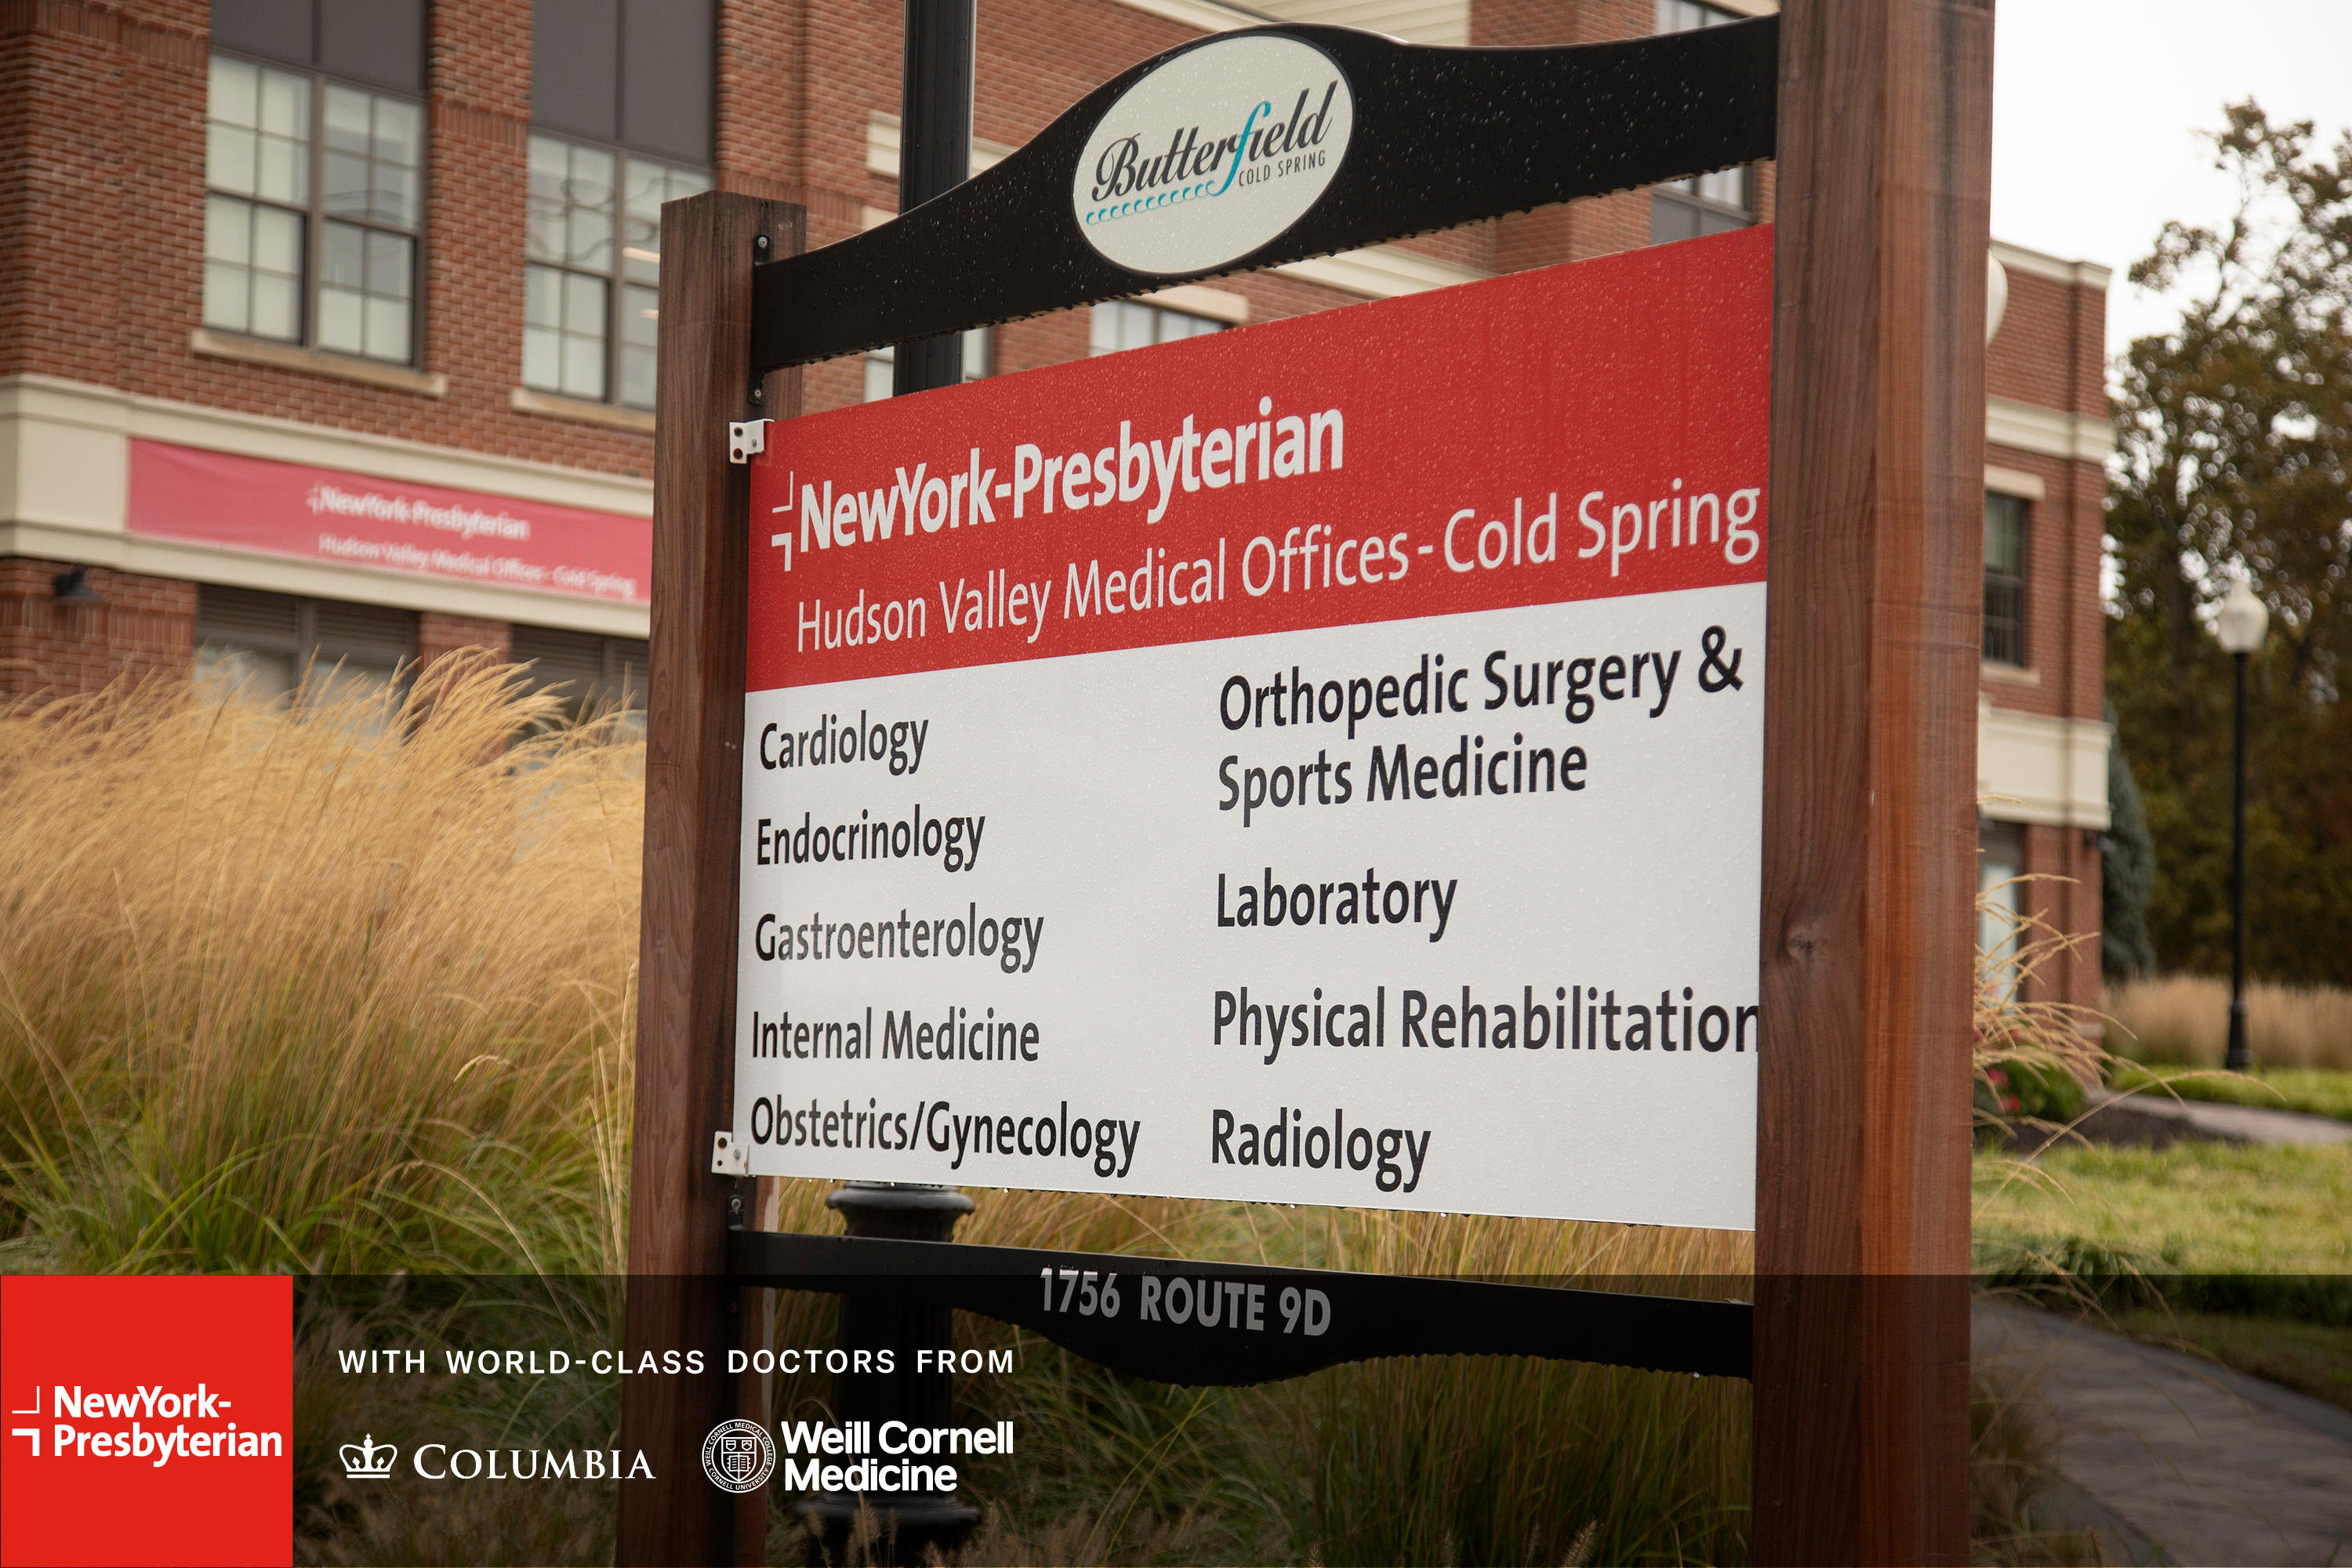 Image 3 | NewYork-Presbyterian Medical Group Hudson Valley - Physcial Medicine & Rehabilitation, Sports Medicine - Cold Spring